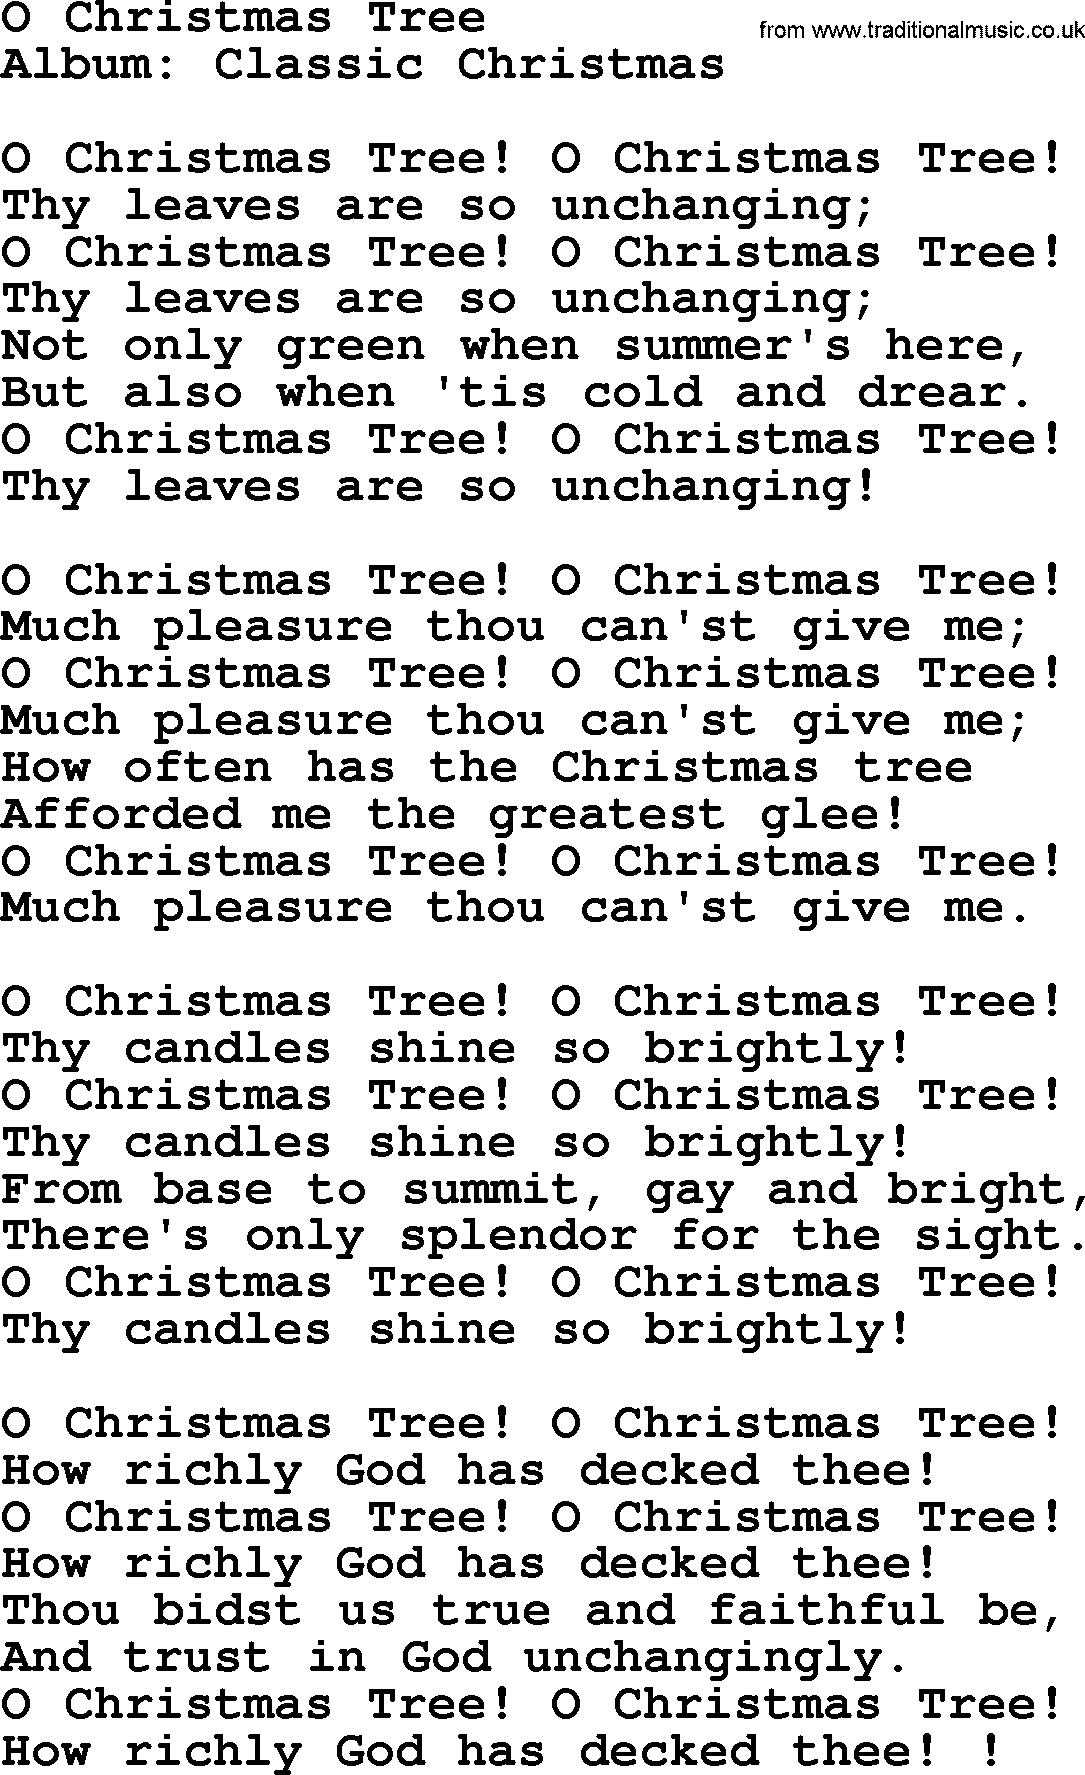 George Strait song: O Christmas Tree, lyrics